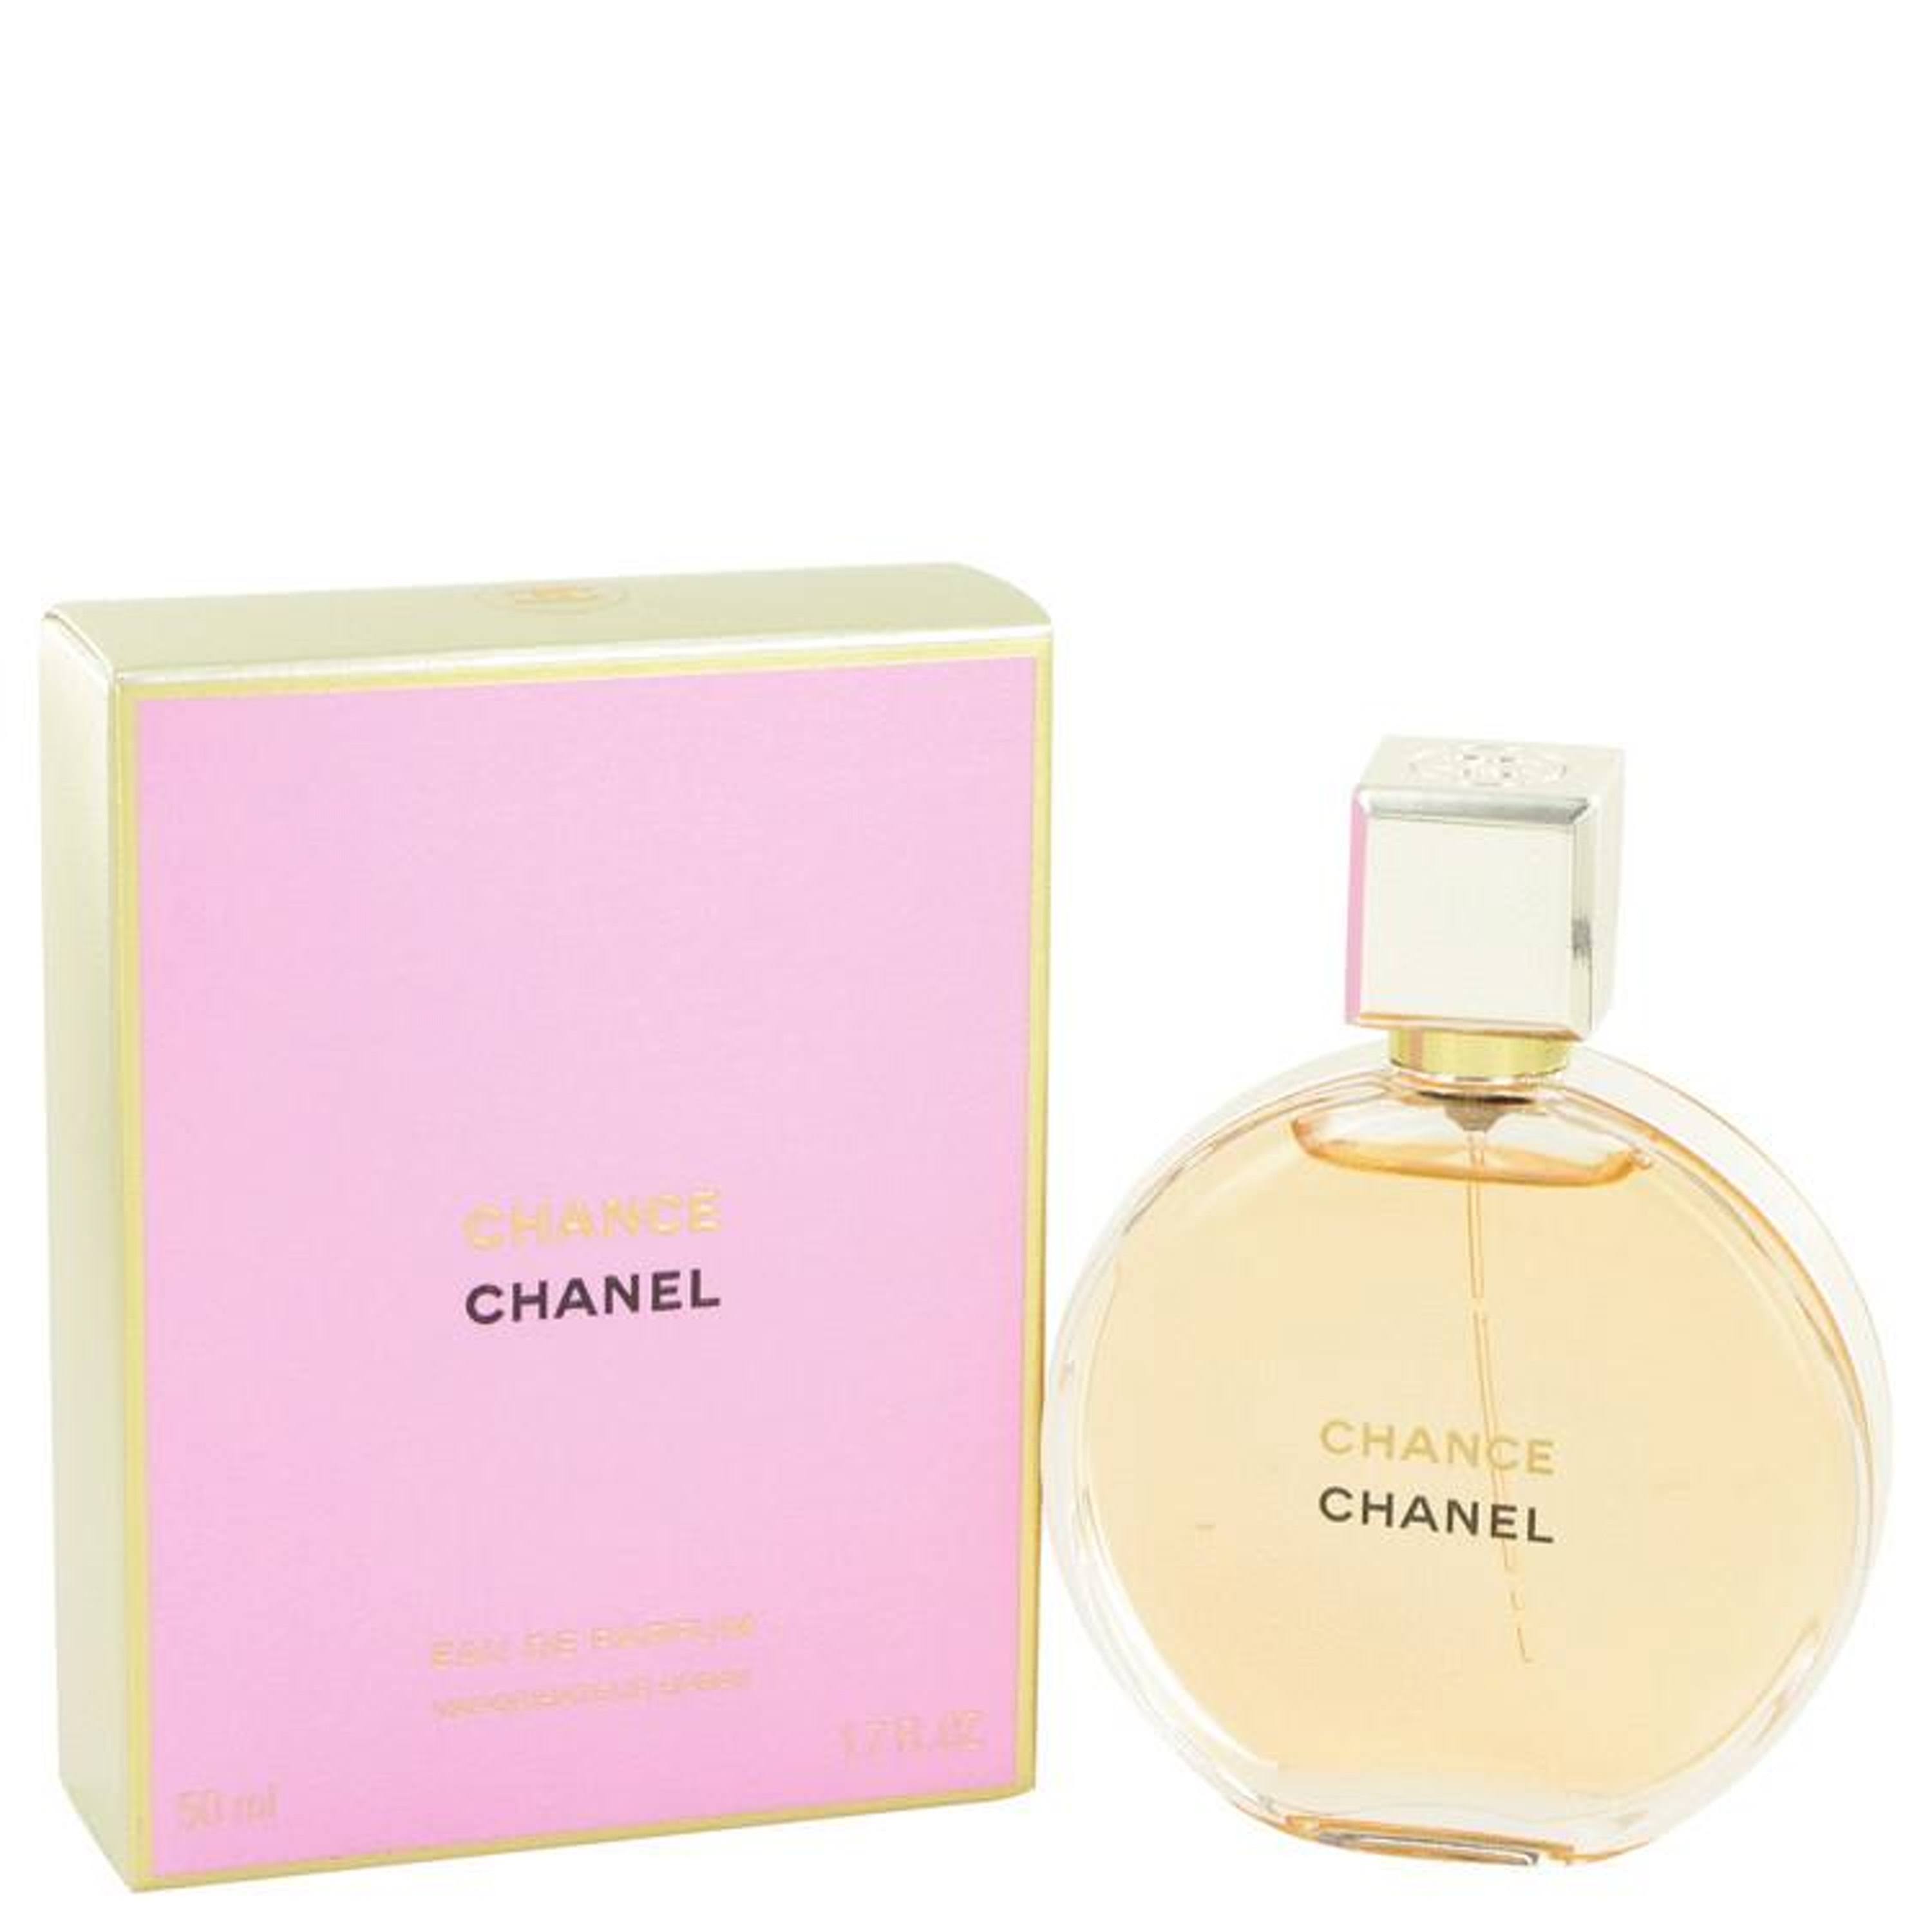 Chanel "Chance" Eau De Parfum Spray - 50ml